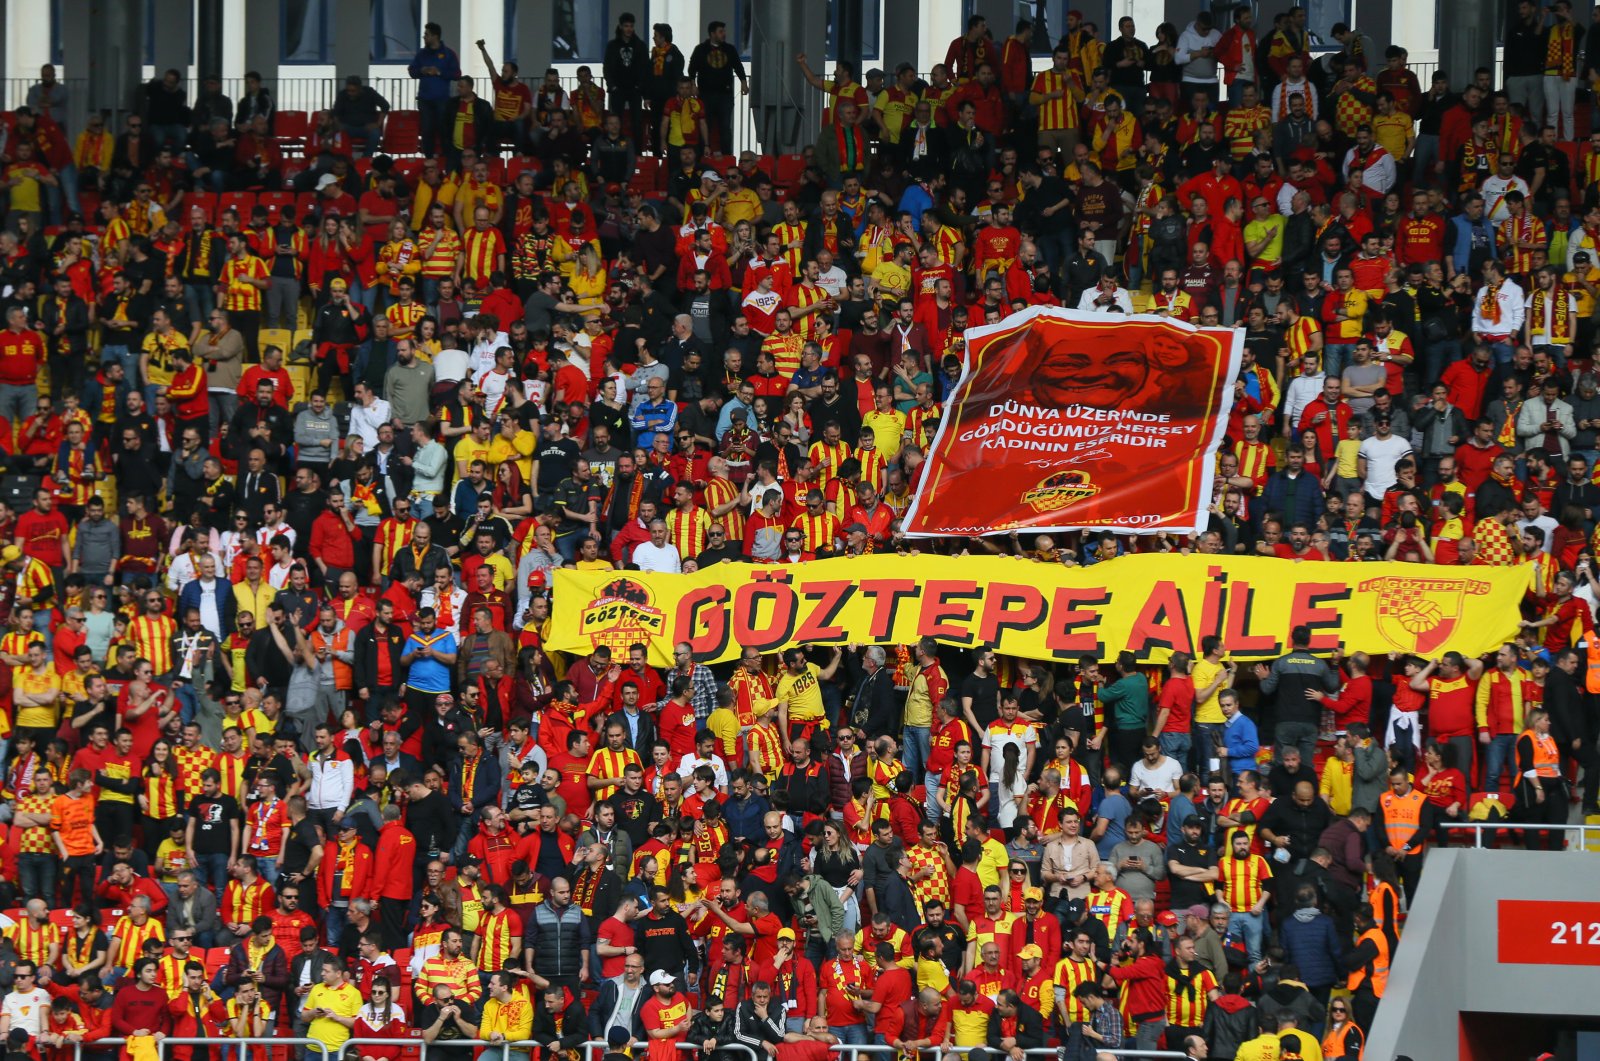 Göztepe fans fill the stands during a match against Başakşehir, March 7, 2020. (AA Photo)